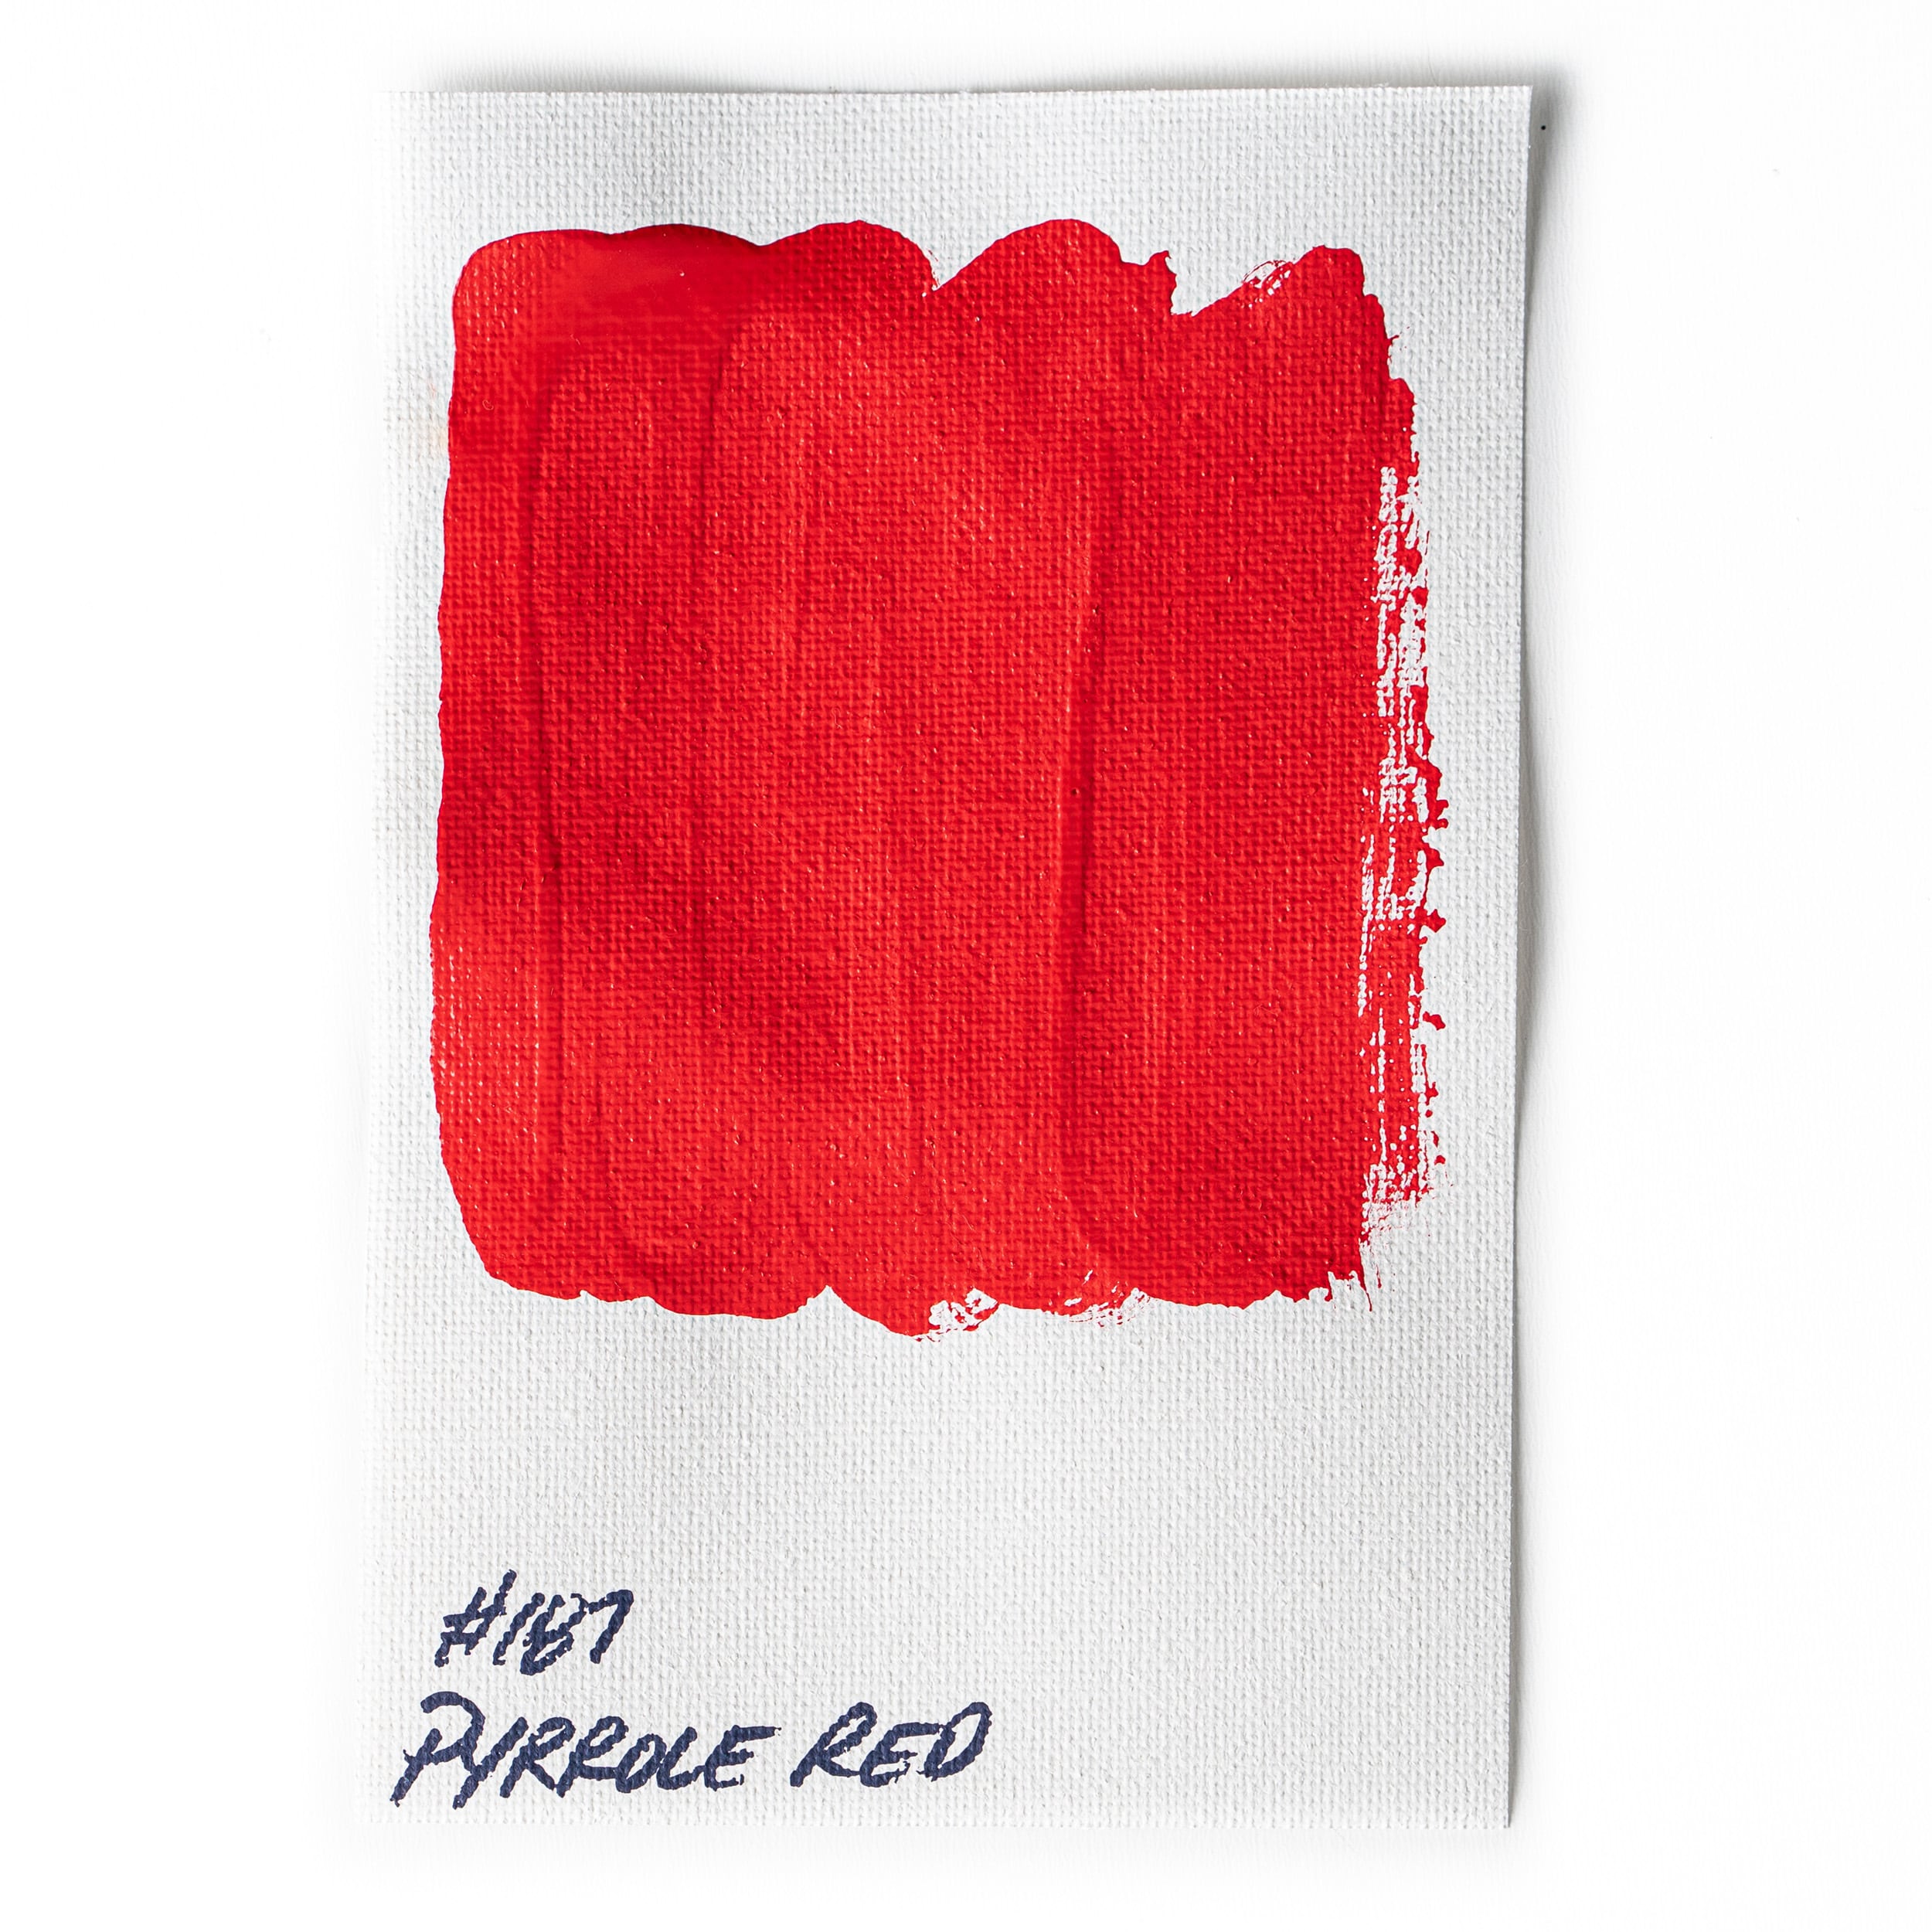 Buy #187 Pyrrole Red - Lightfastness:, - Translucent Online